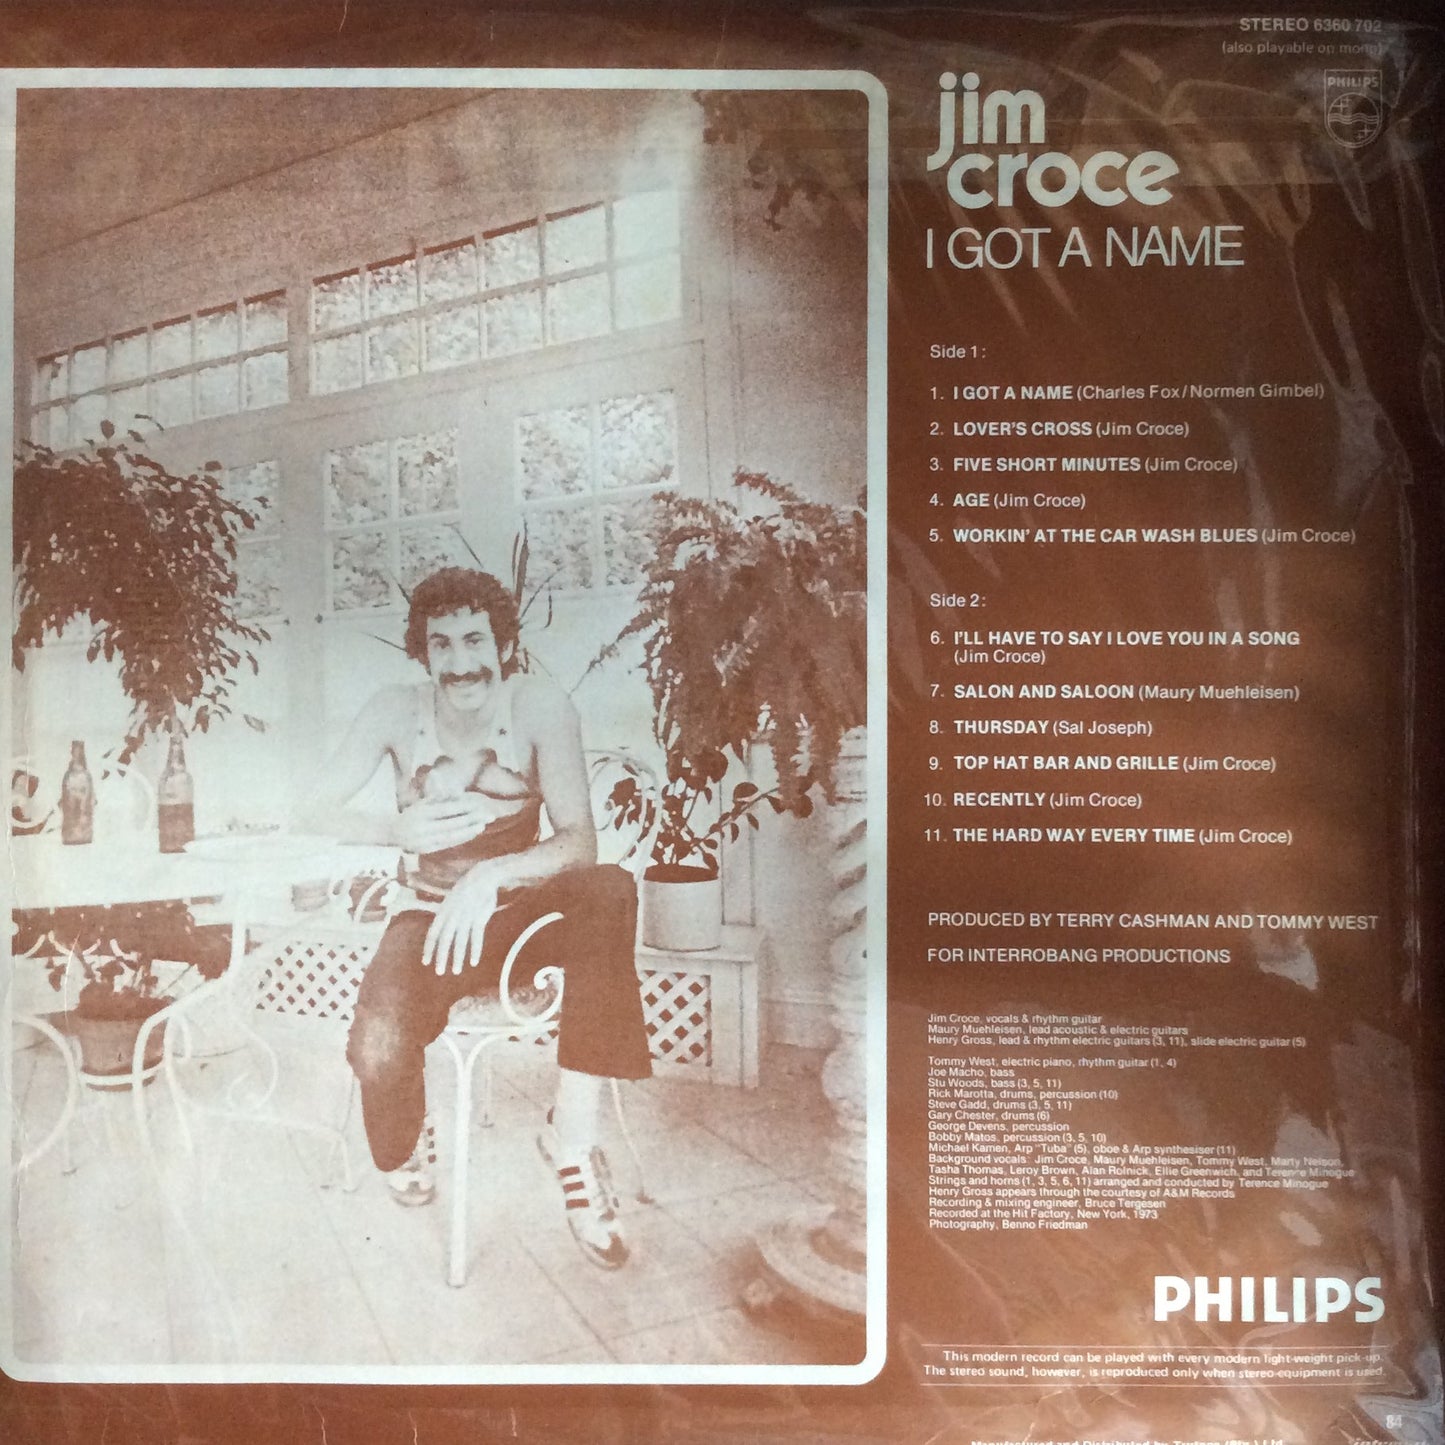 Jim Croce - I Got Name